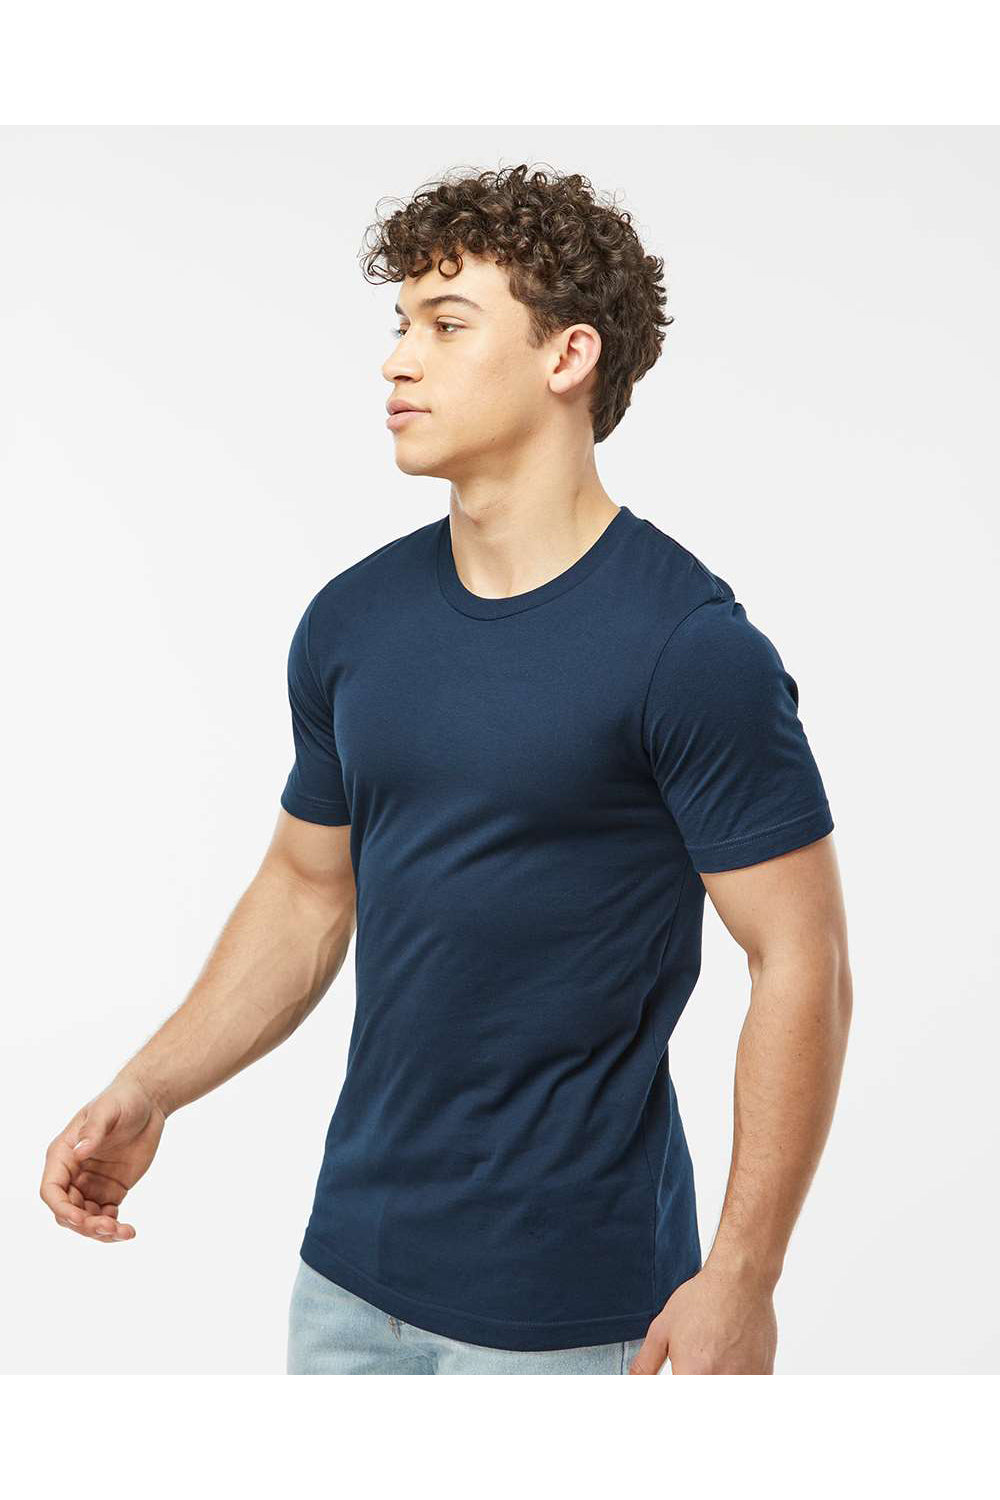 Tultex 502 Mens Premium Short Sleeve Crewneck T-Shirt Navy Blue Model Side